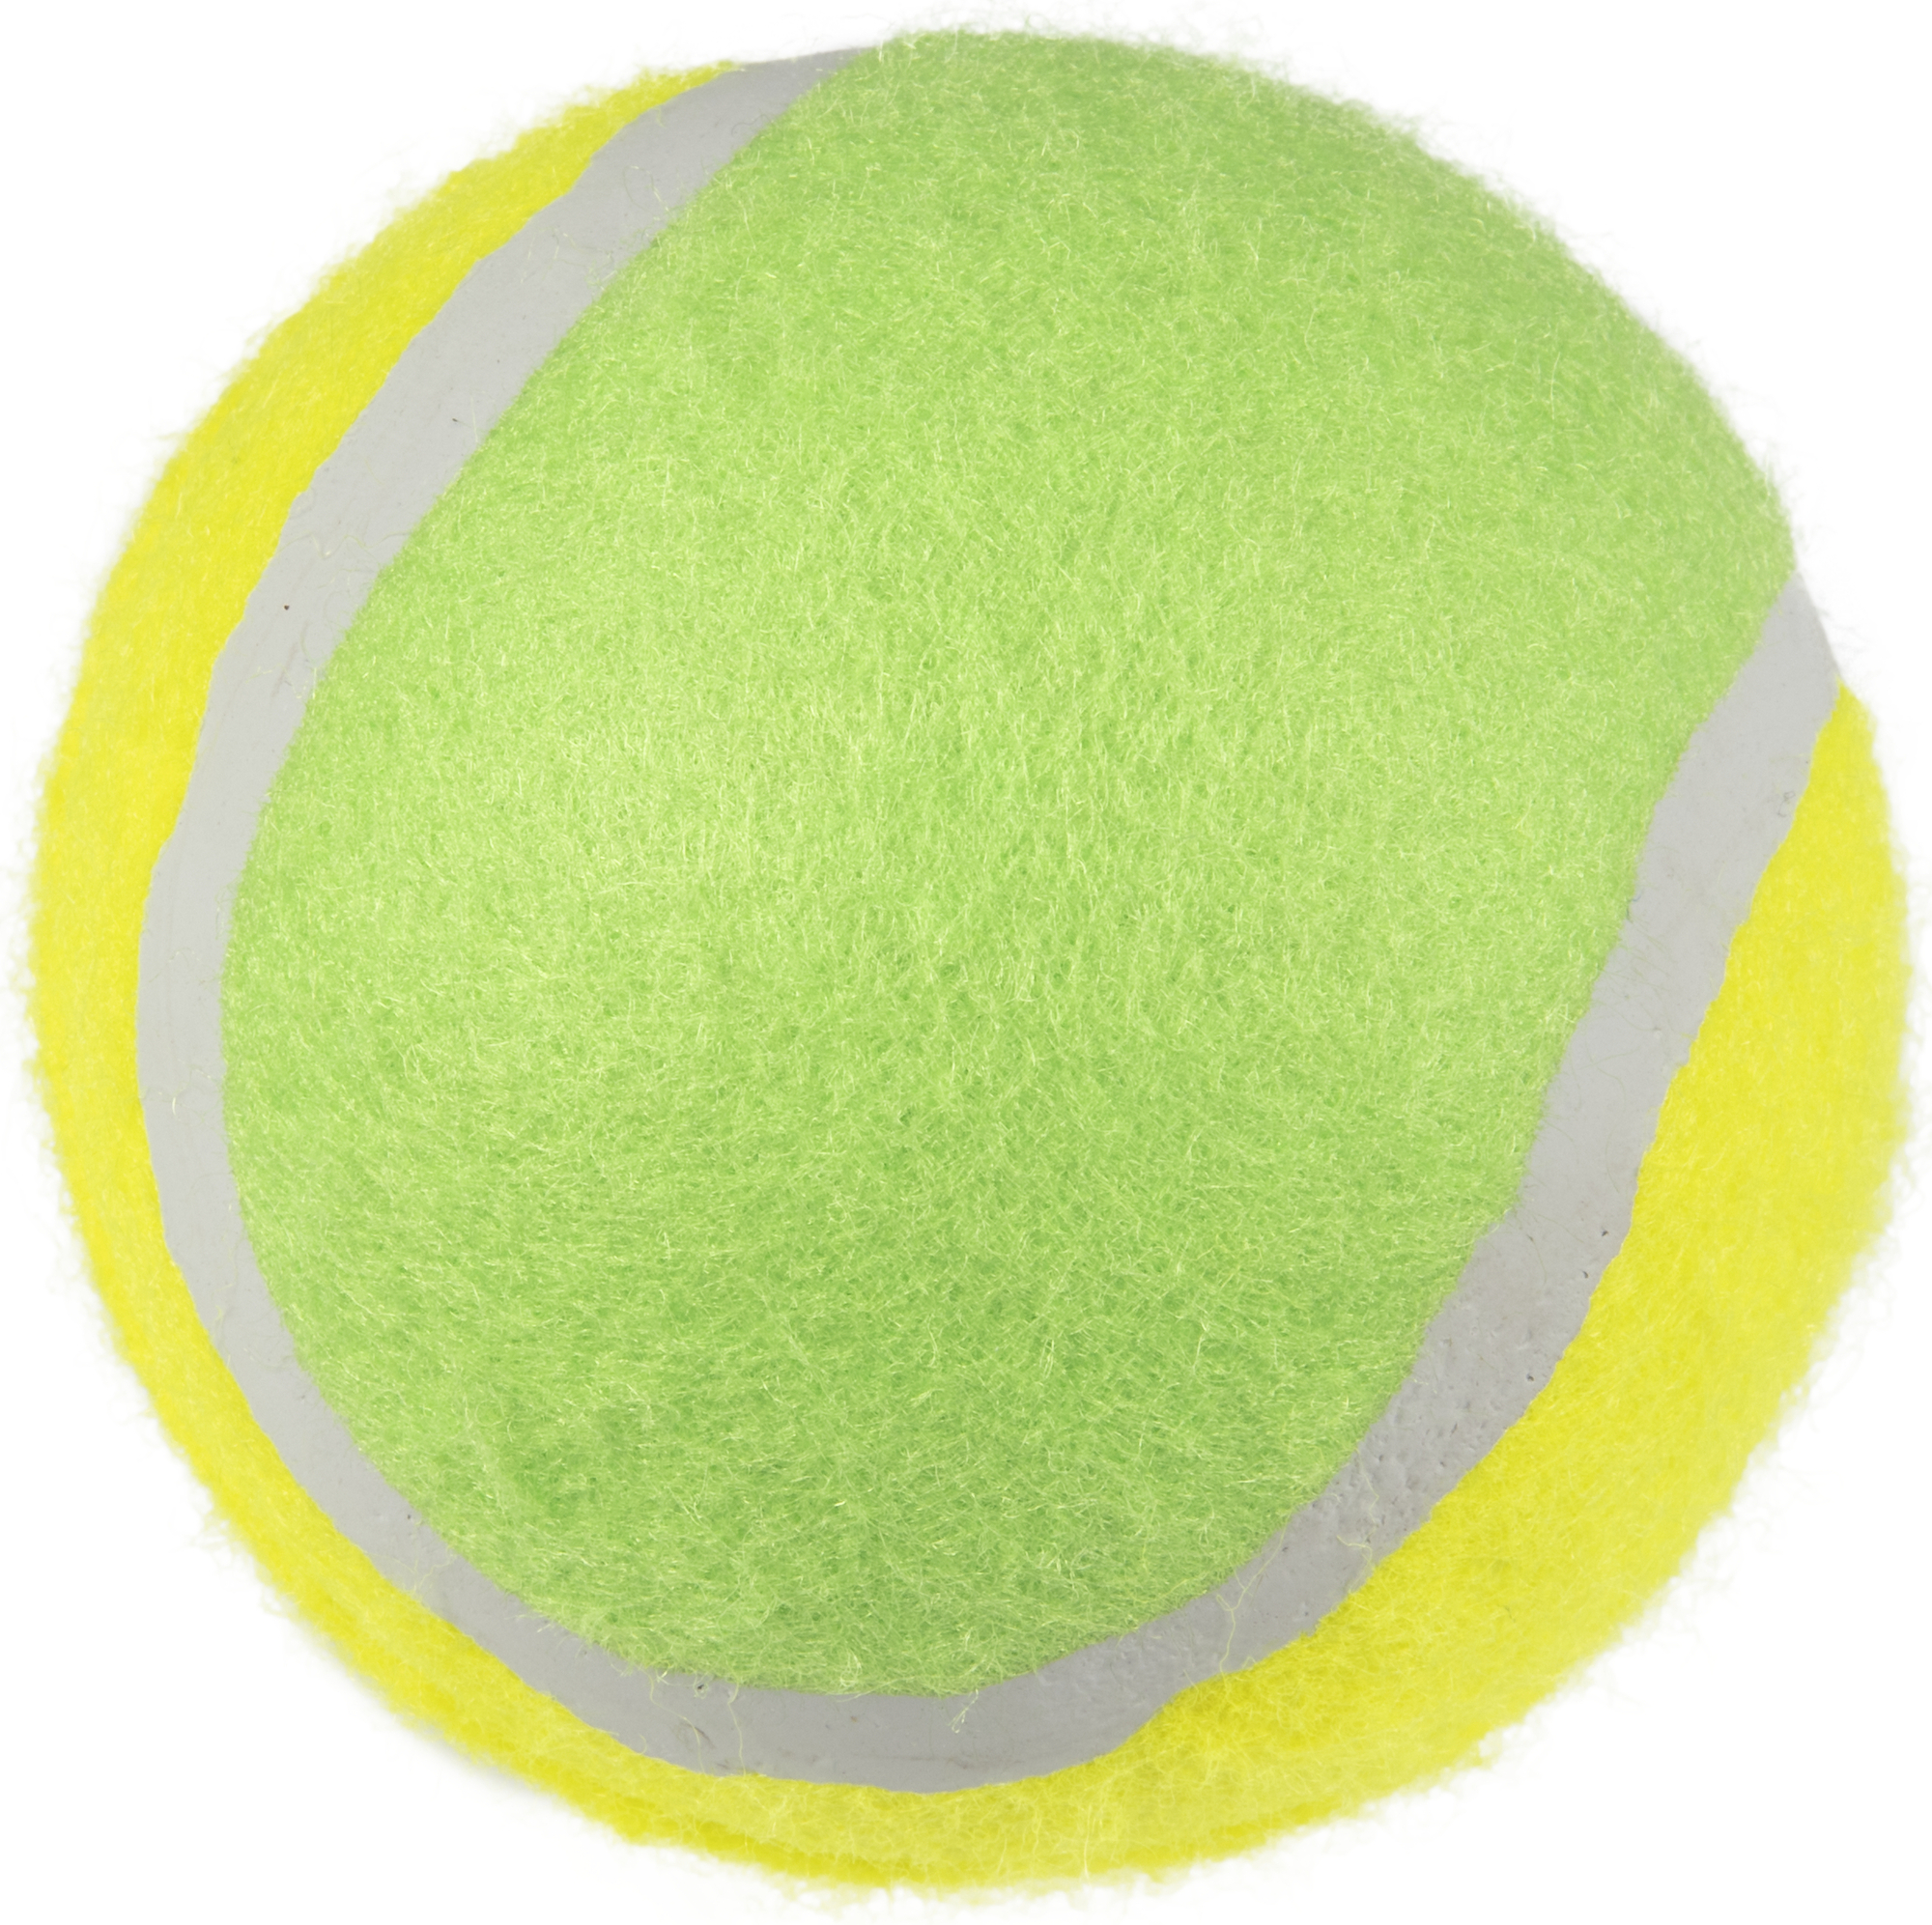 Toy Smash Tennis ball Yellow & Green | 518488 | Flamingo Pet Products